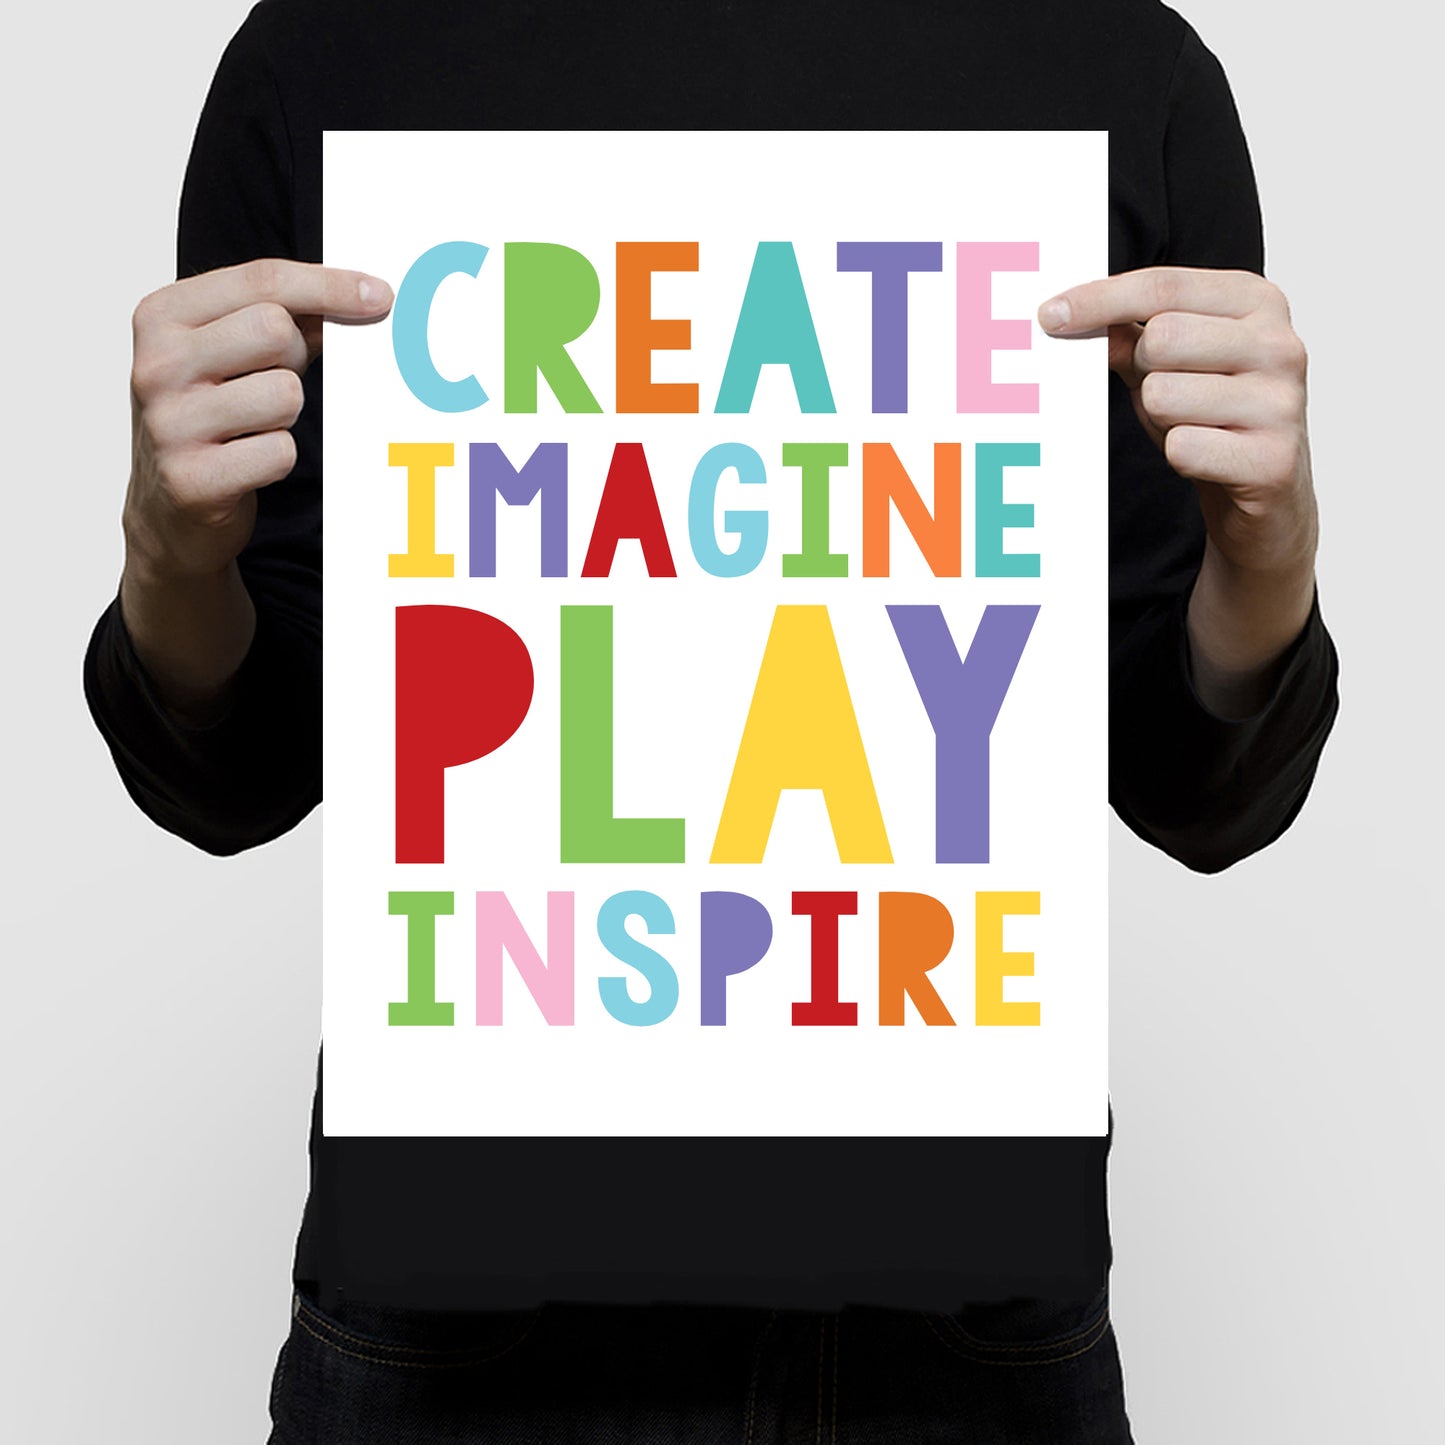 Create imagine play inspire print